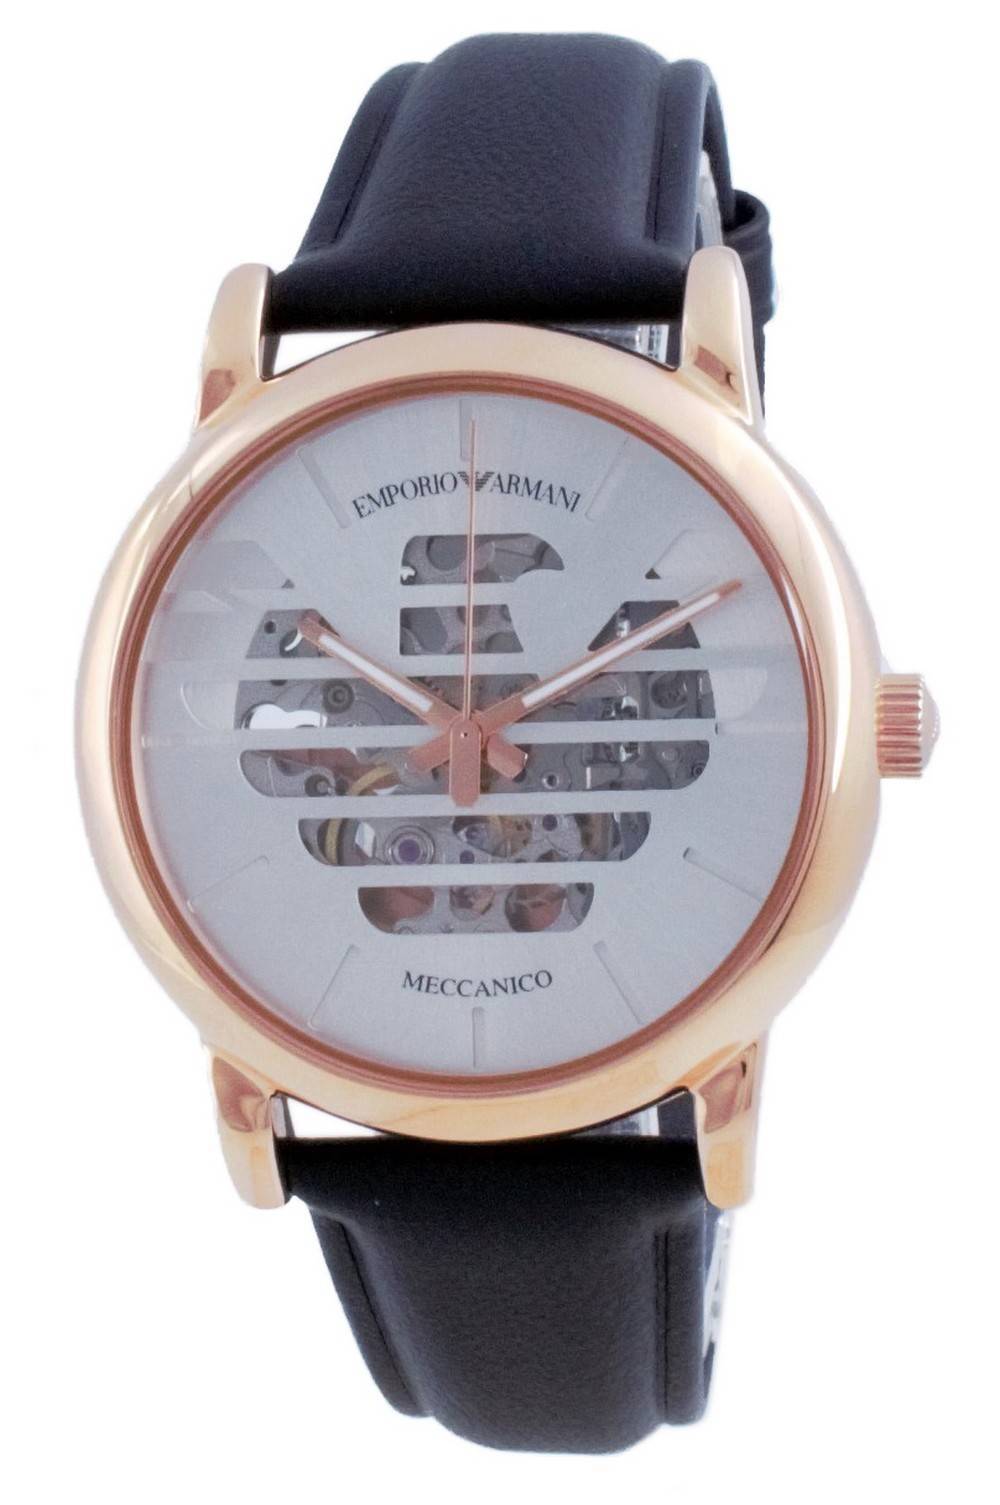 Relojes Emporio Armani: relojes de creación